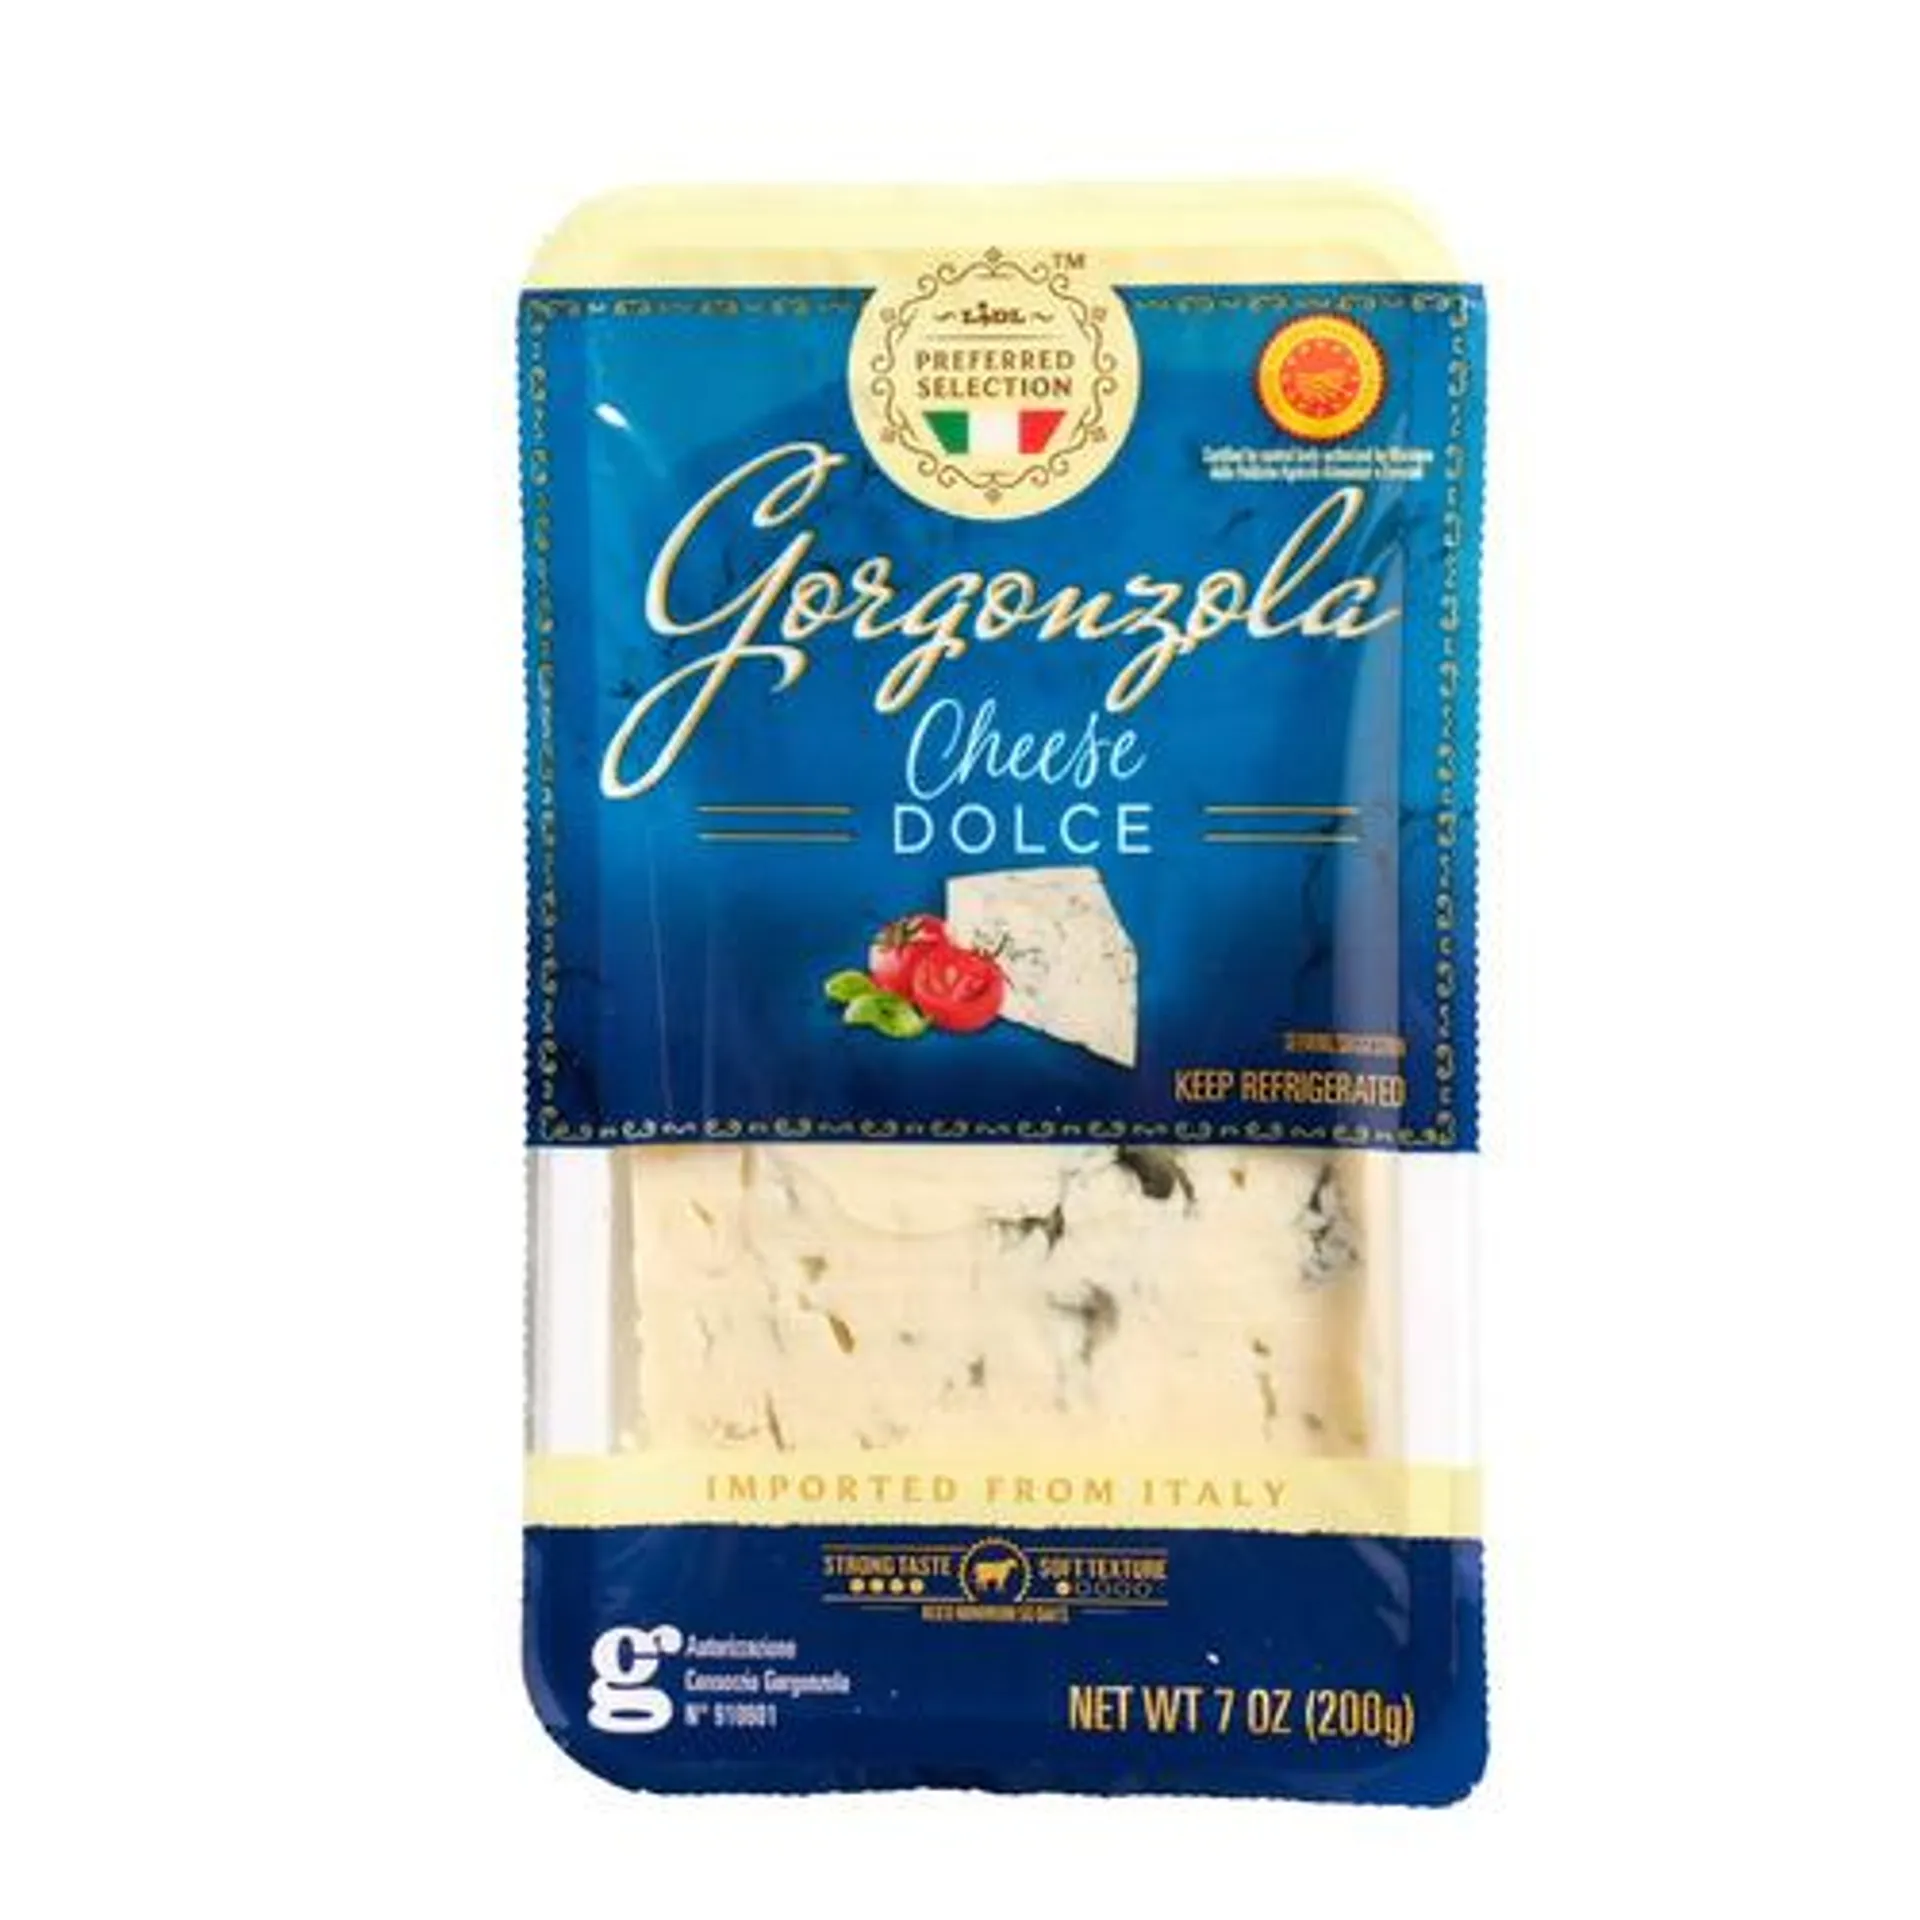 Lidl Preferred Selection gorgonzola cheese